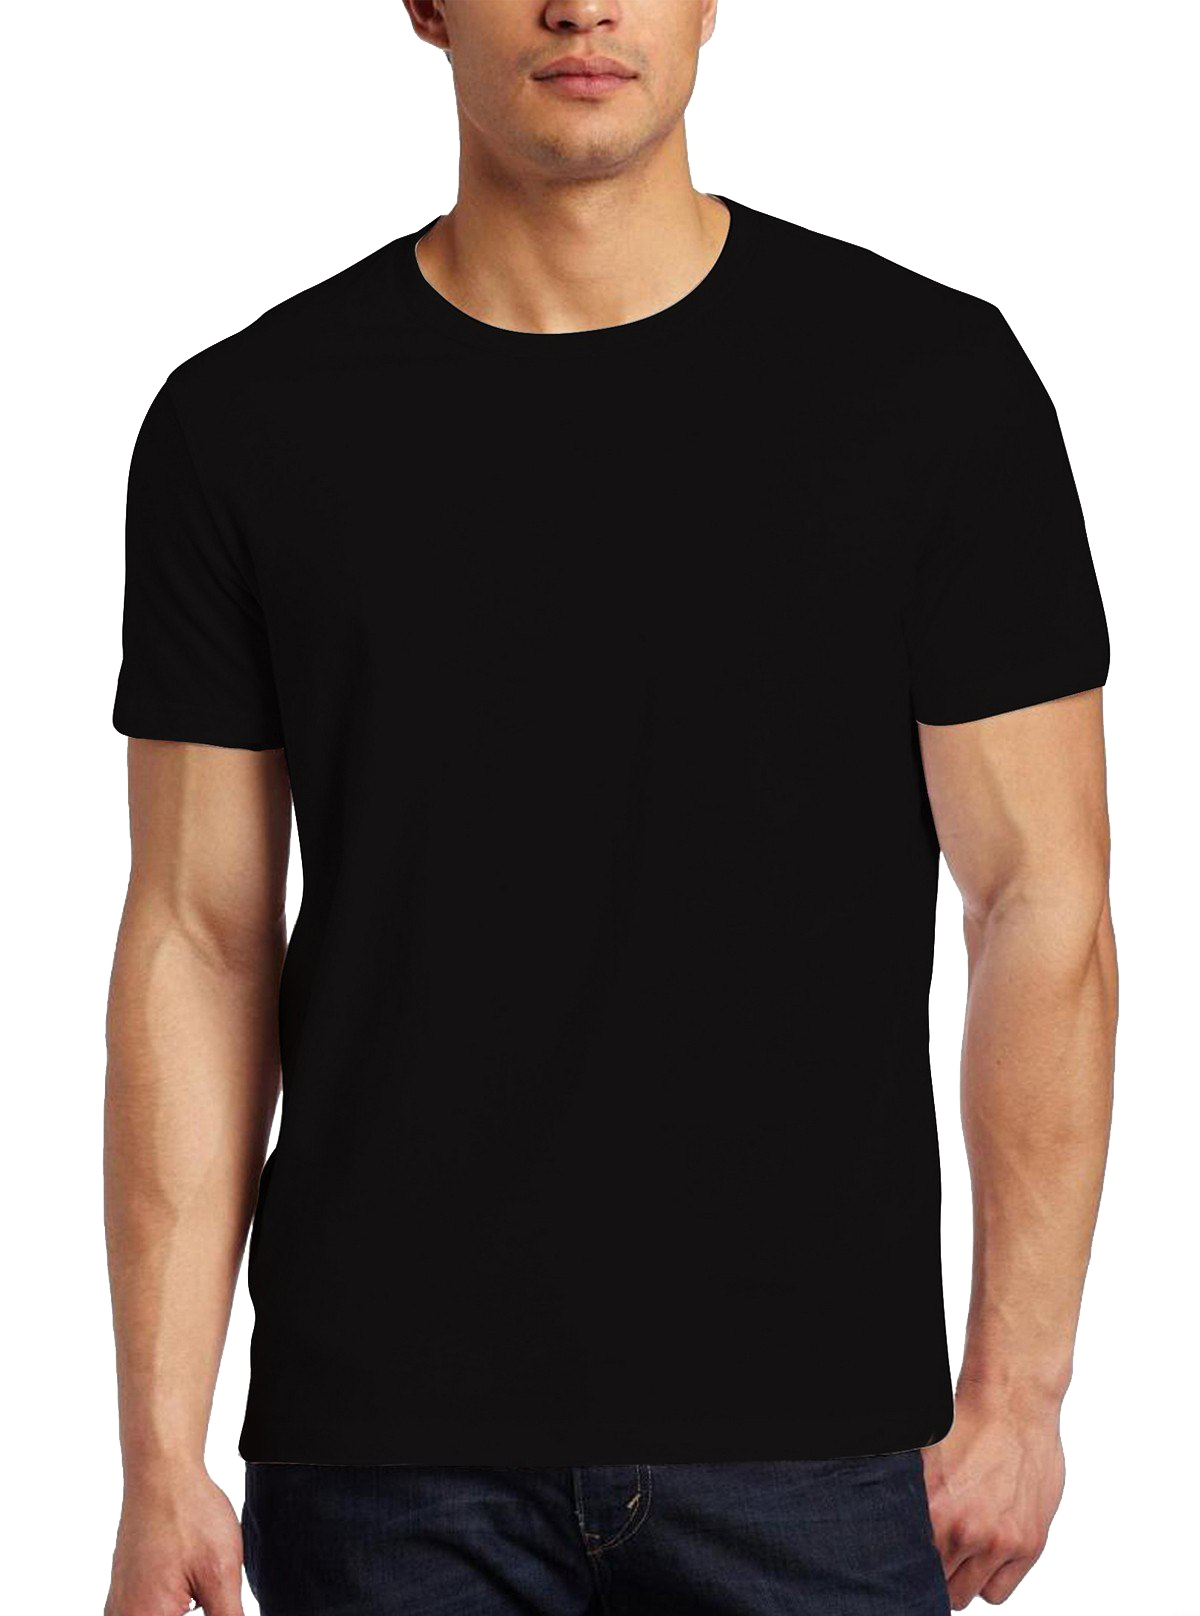 Algodón negro camiseta PNG descargar imagen